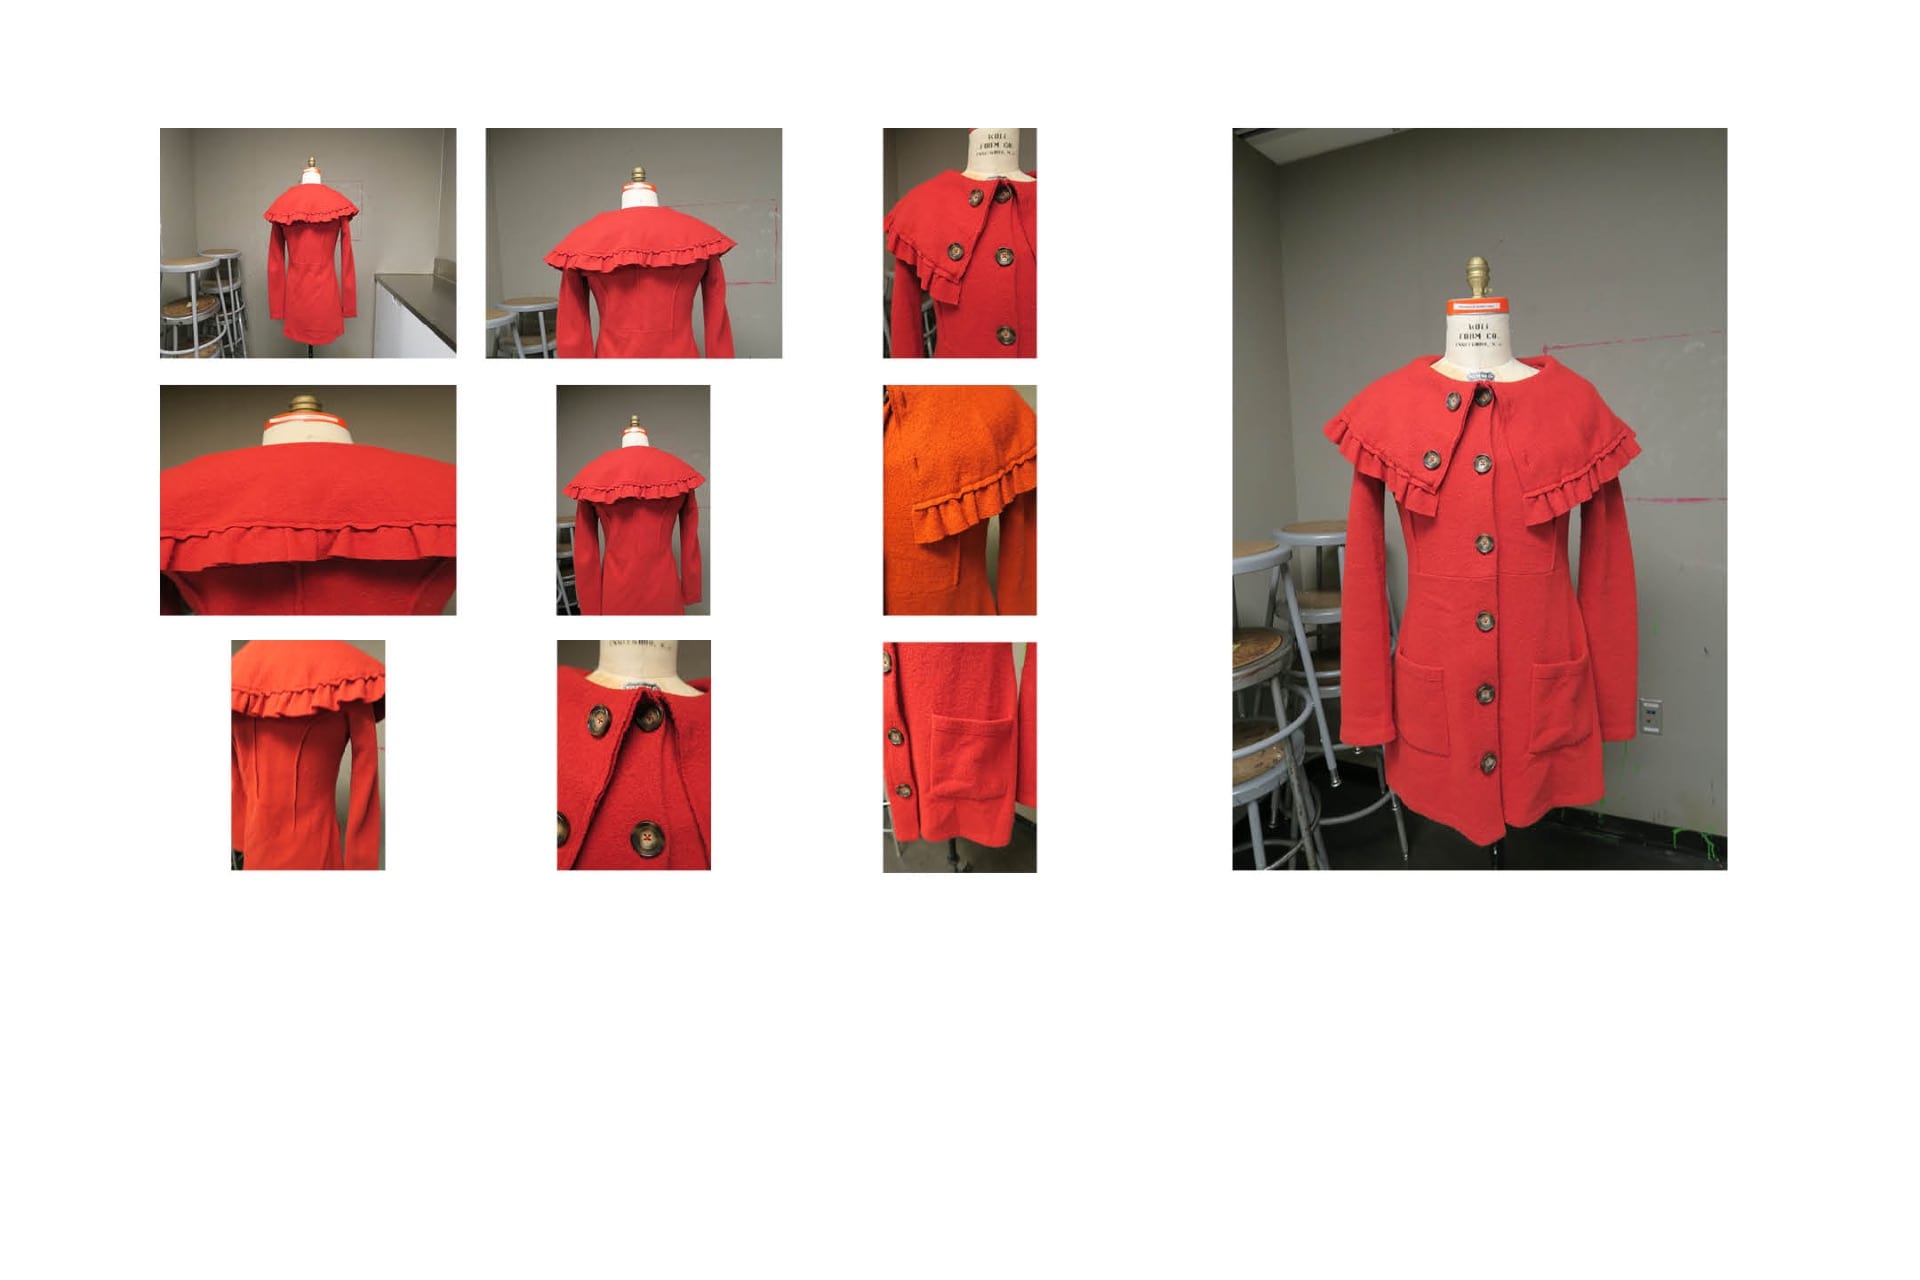 Integrative Studio 2 : The Tale of Two Garments